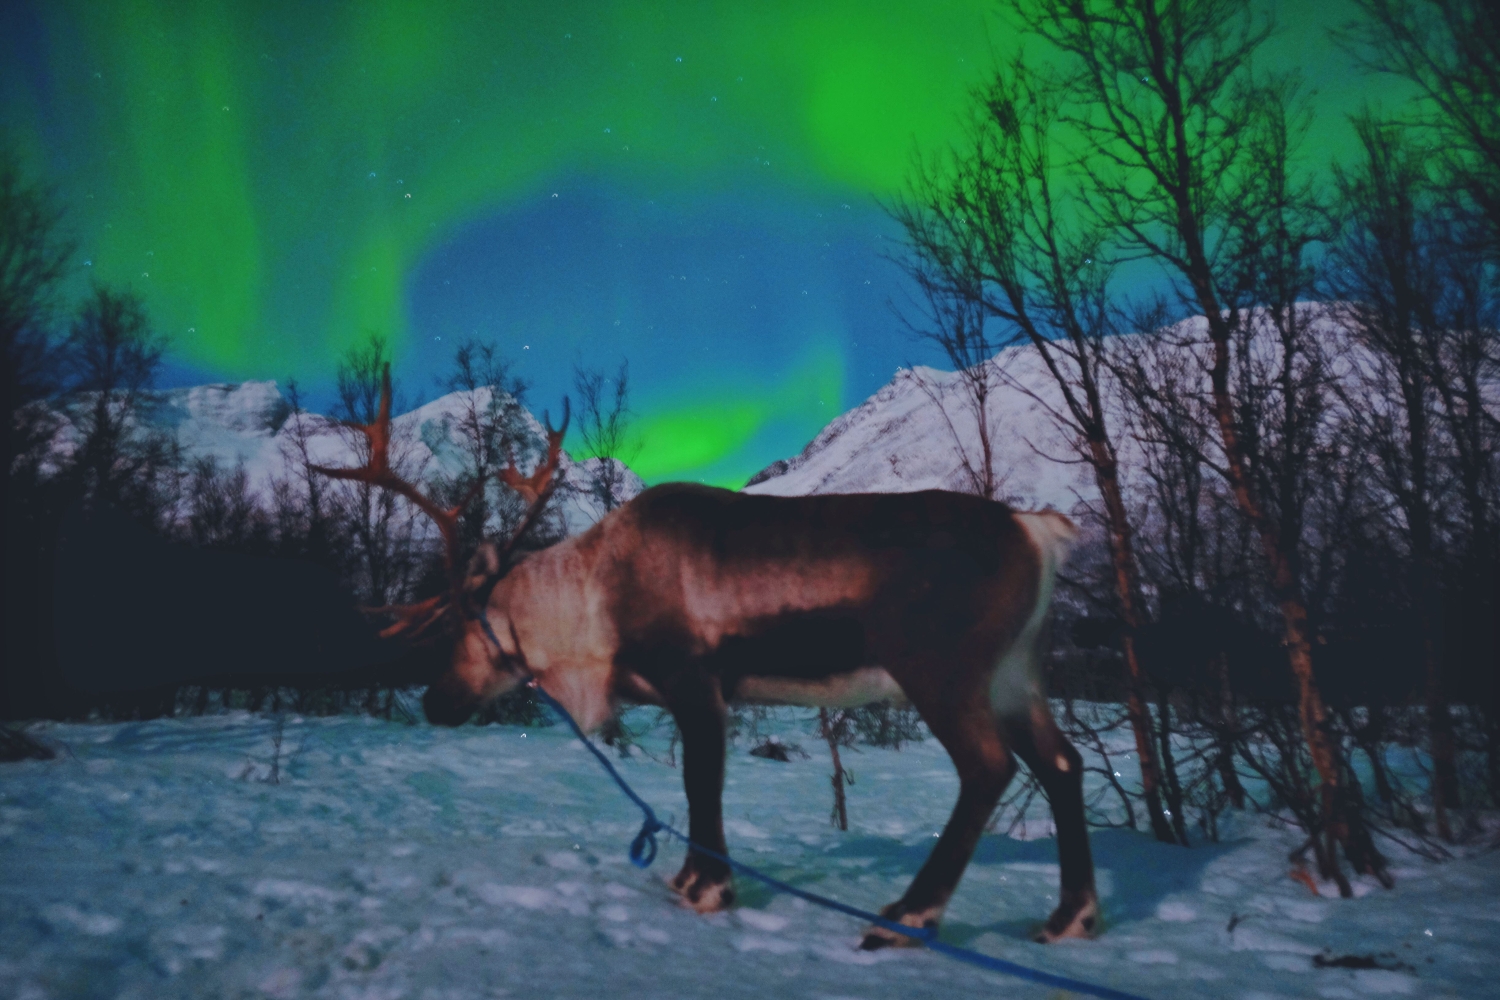 Reindeer Sledding and Northern Lights